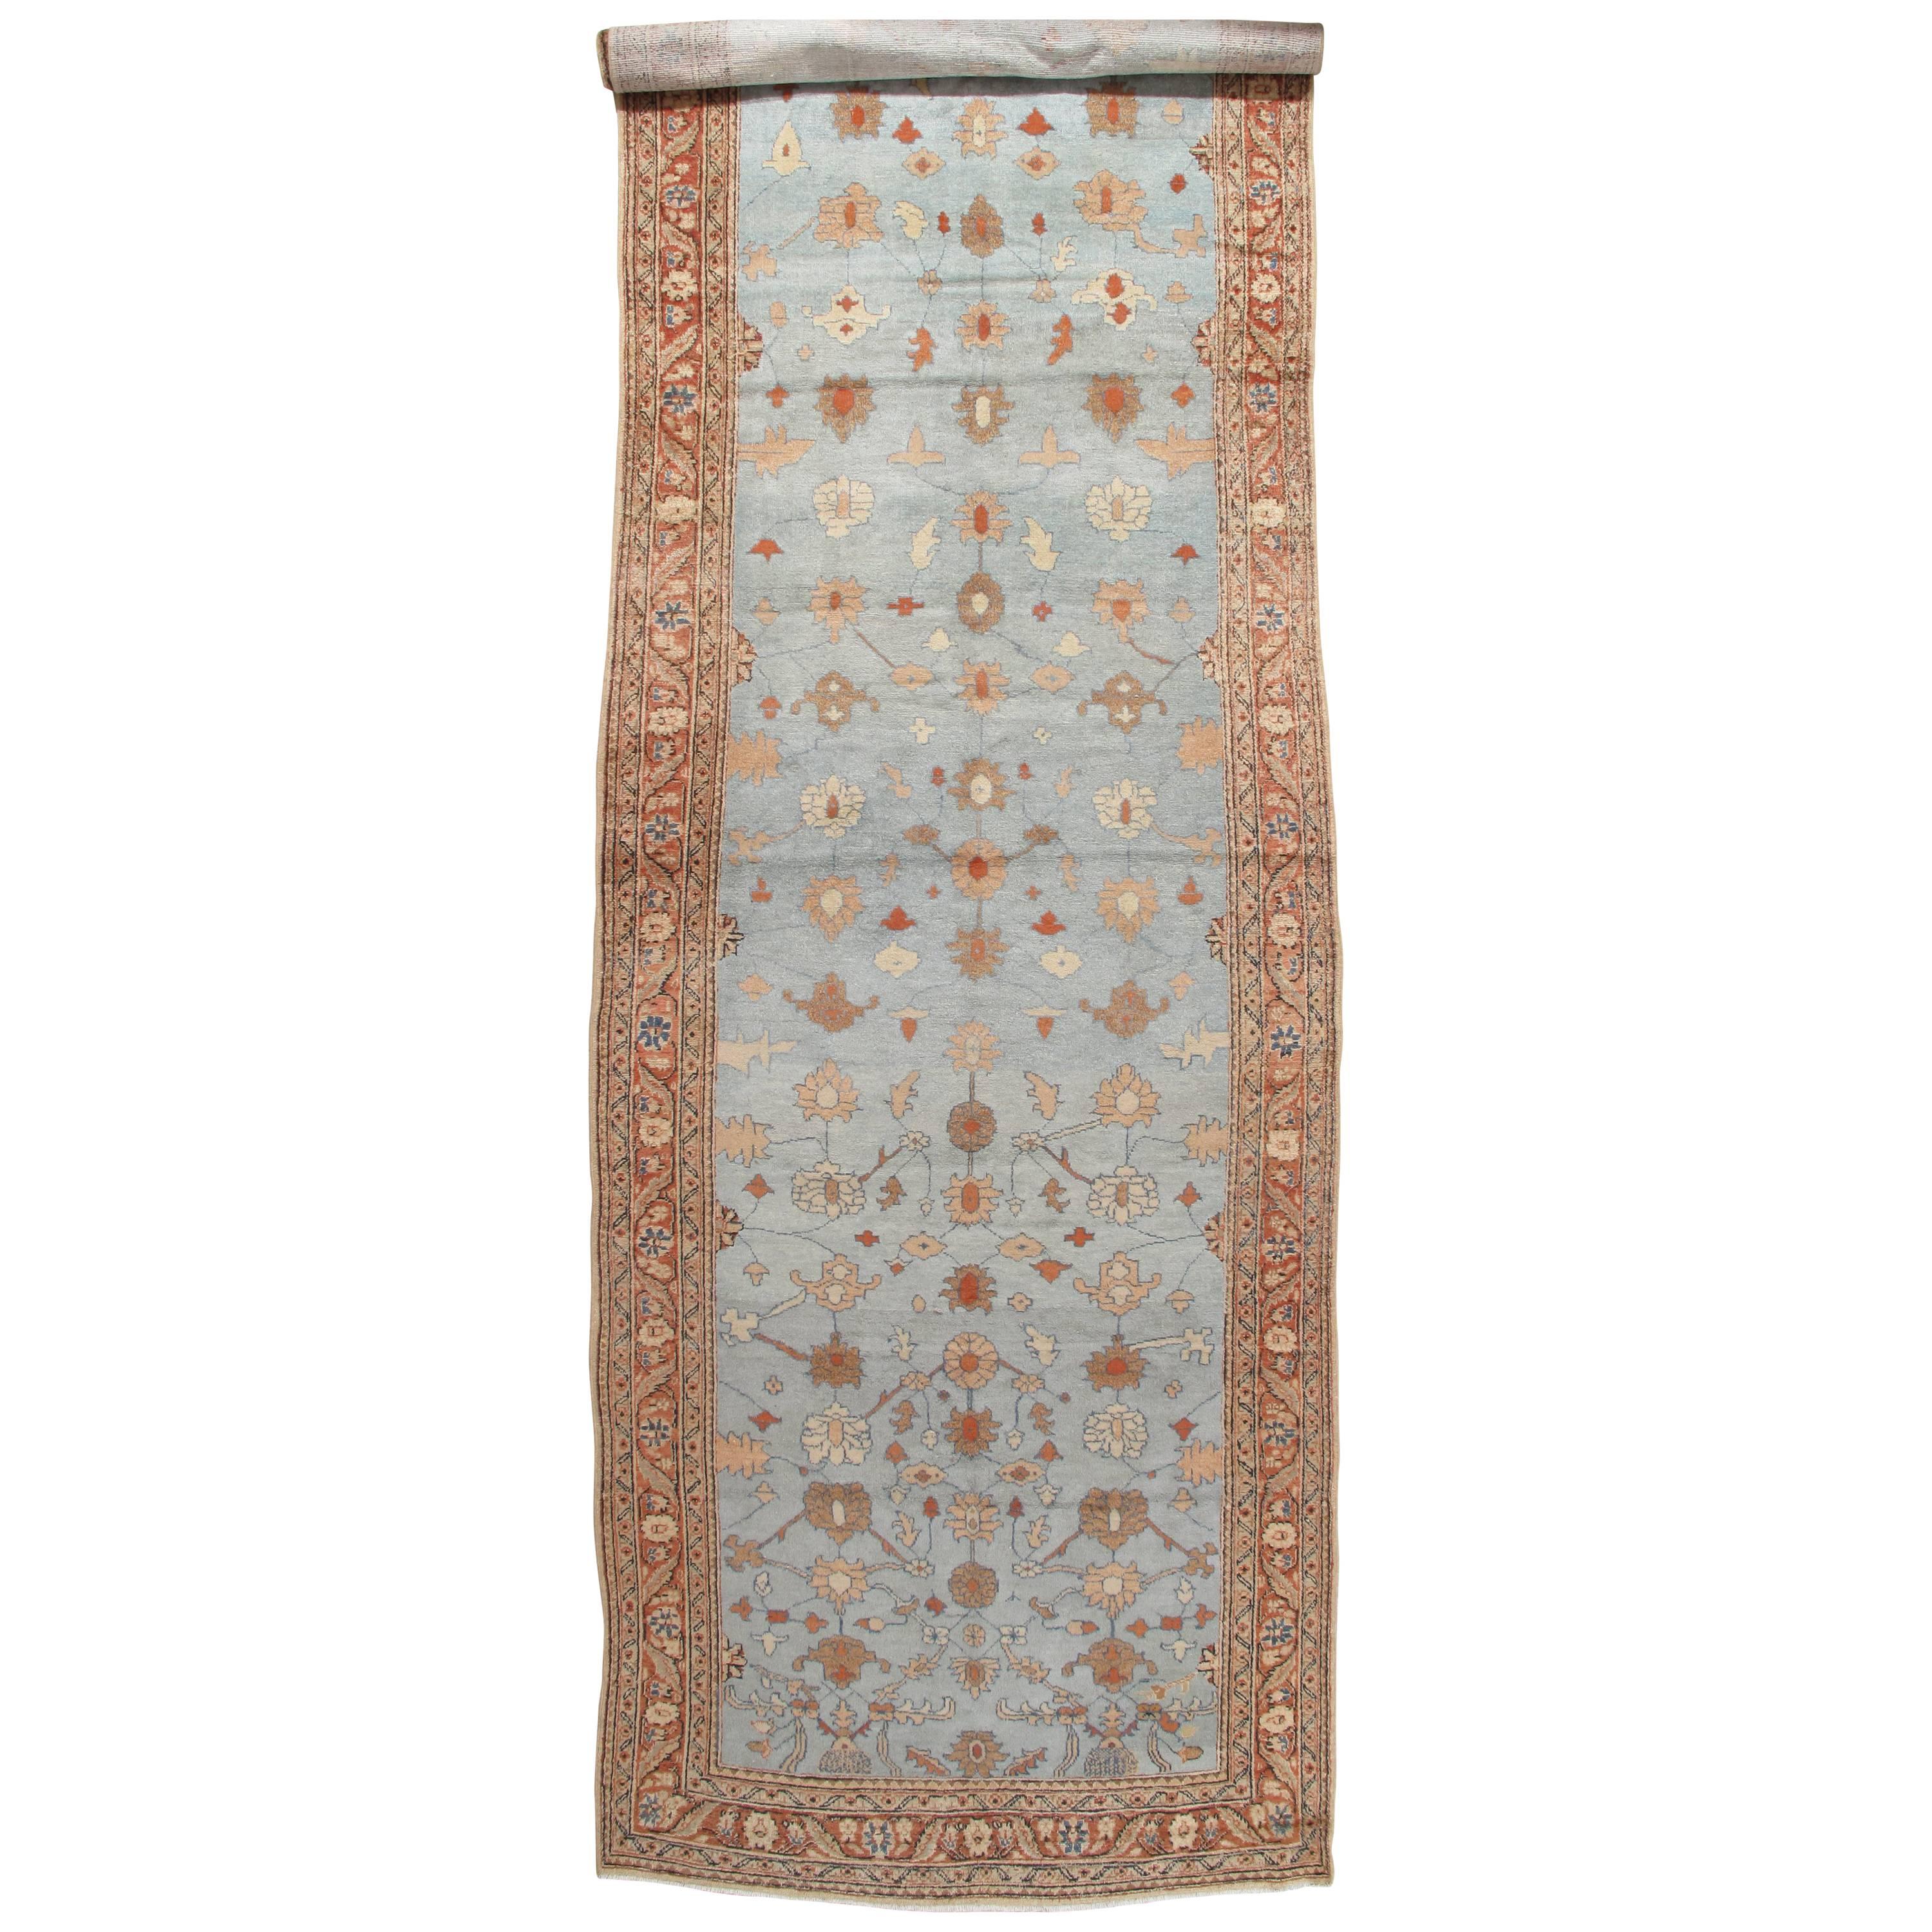 Antique Mahal Runner, Handmade Oriental Rug, Light Blue, Rust, All-Over Design